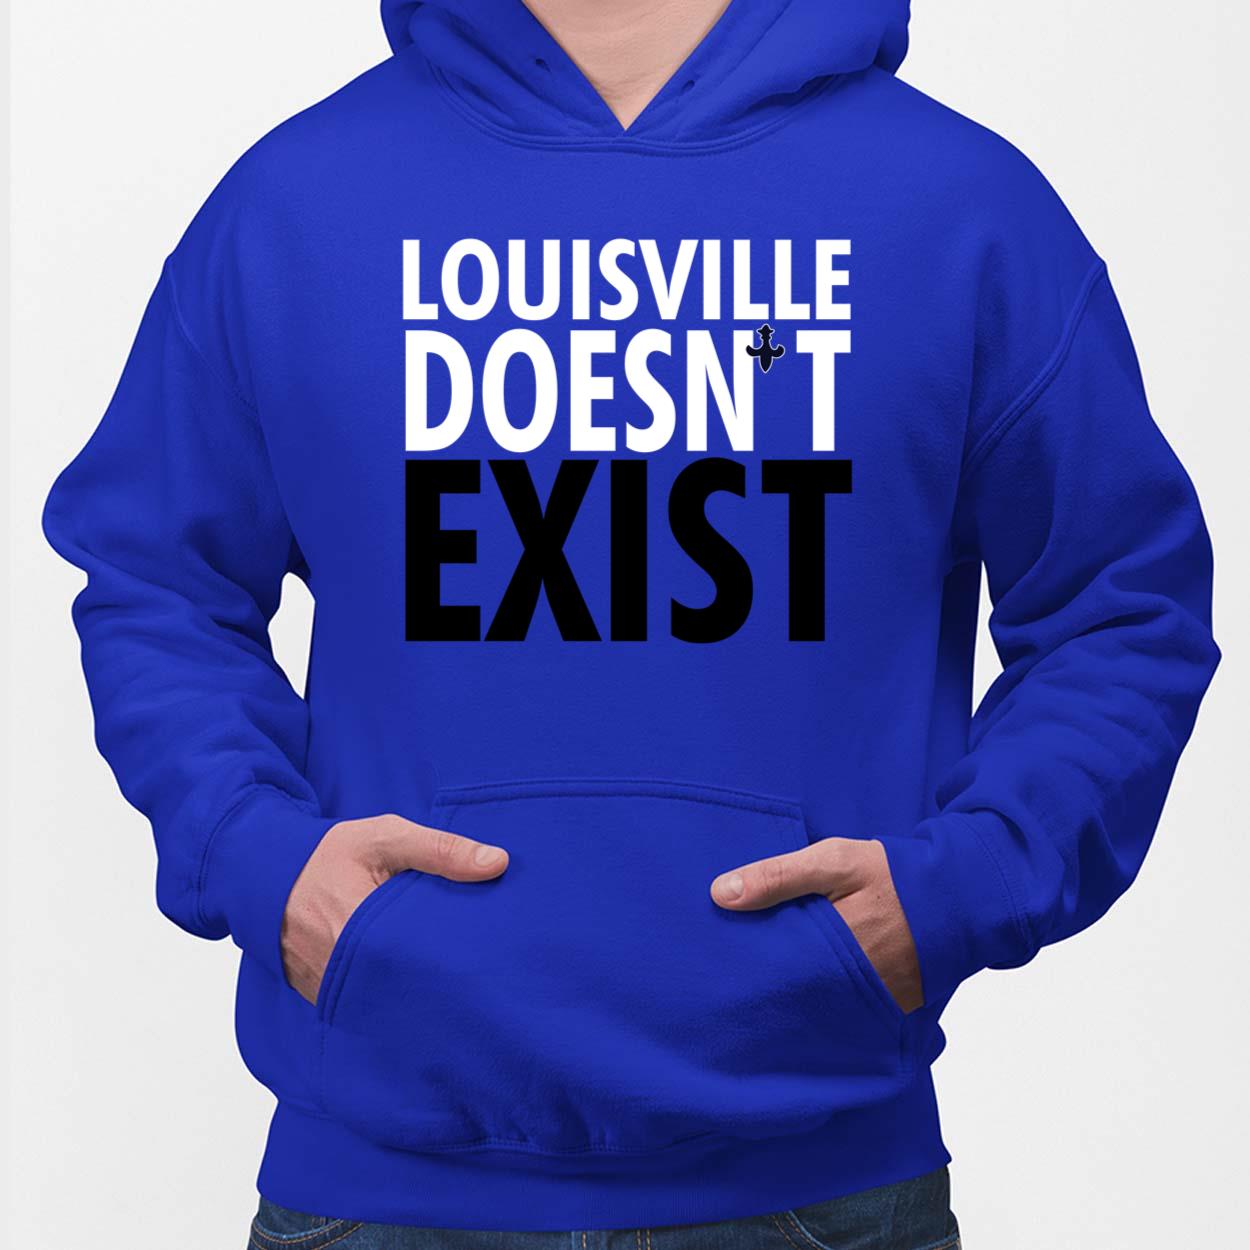 Louisville T-shirt / Pray for Louisville 